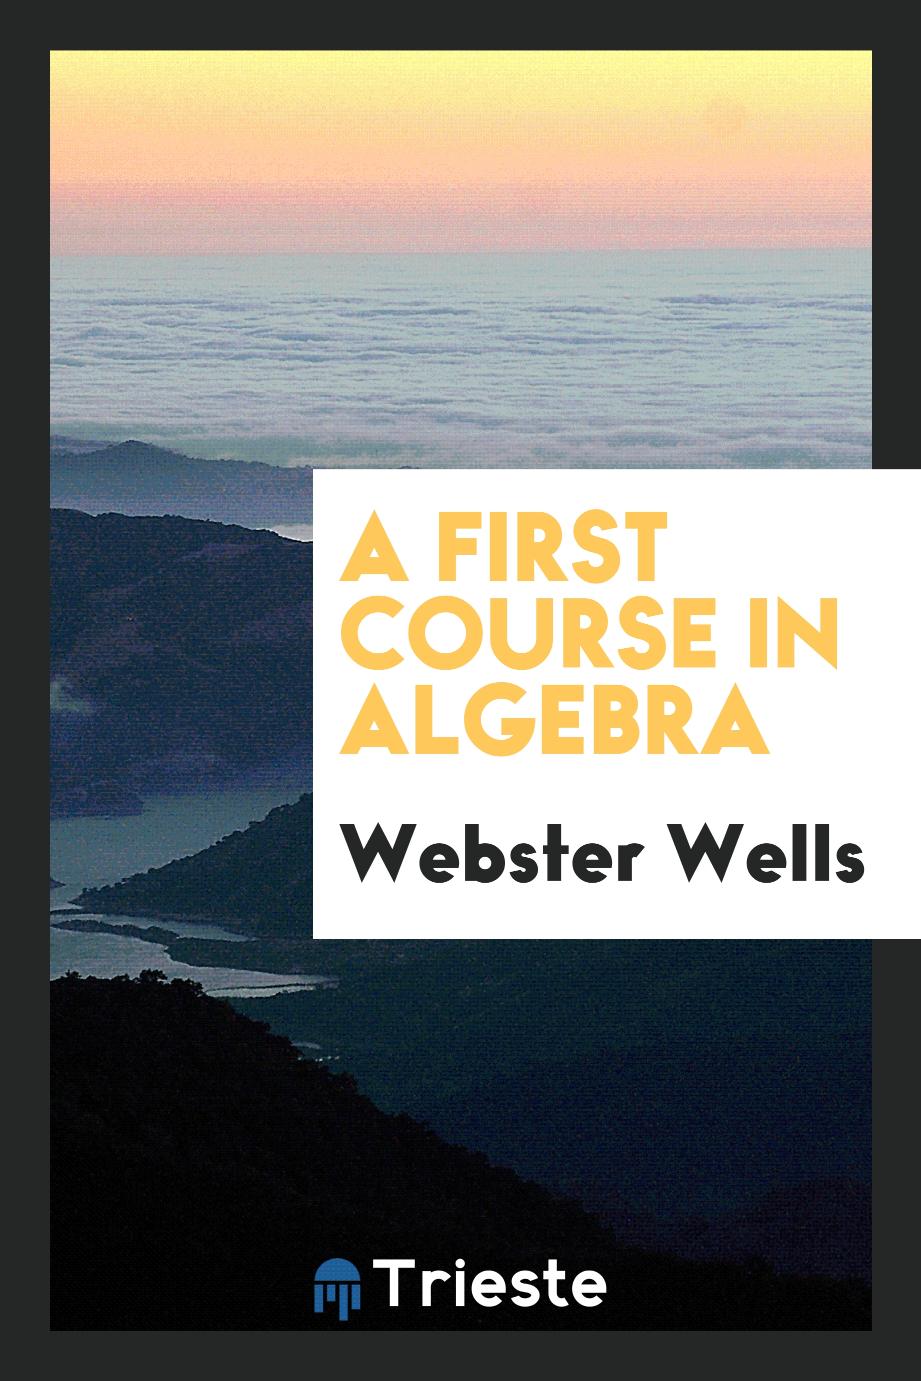 A first course in algebra